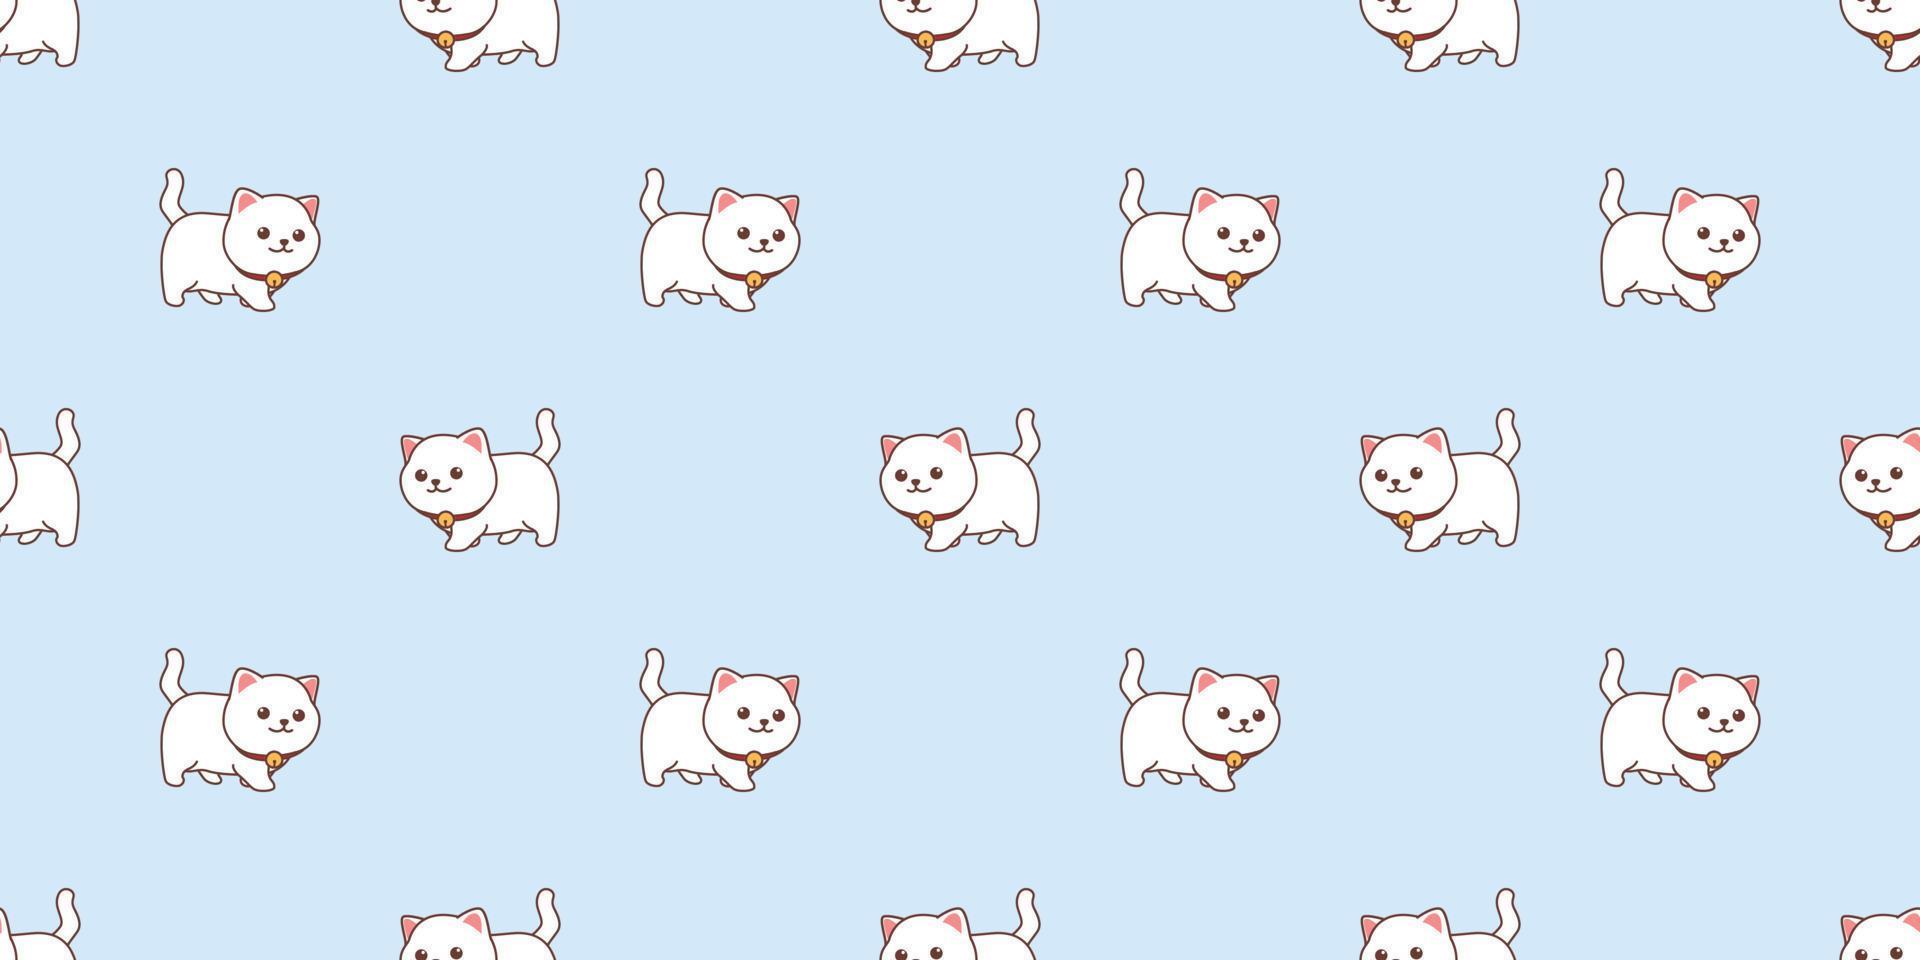 Cute white cat walking cartoon seamless pattern, vector illustration